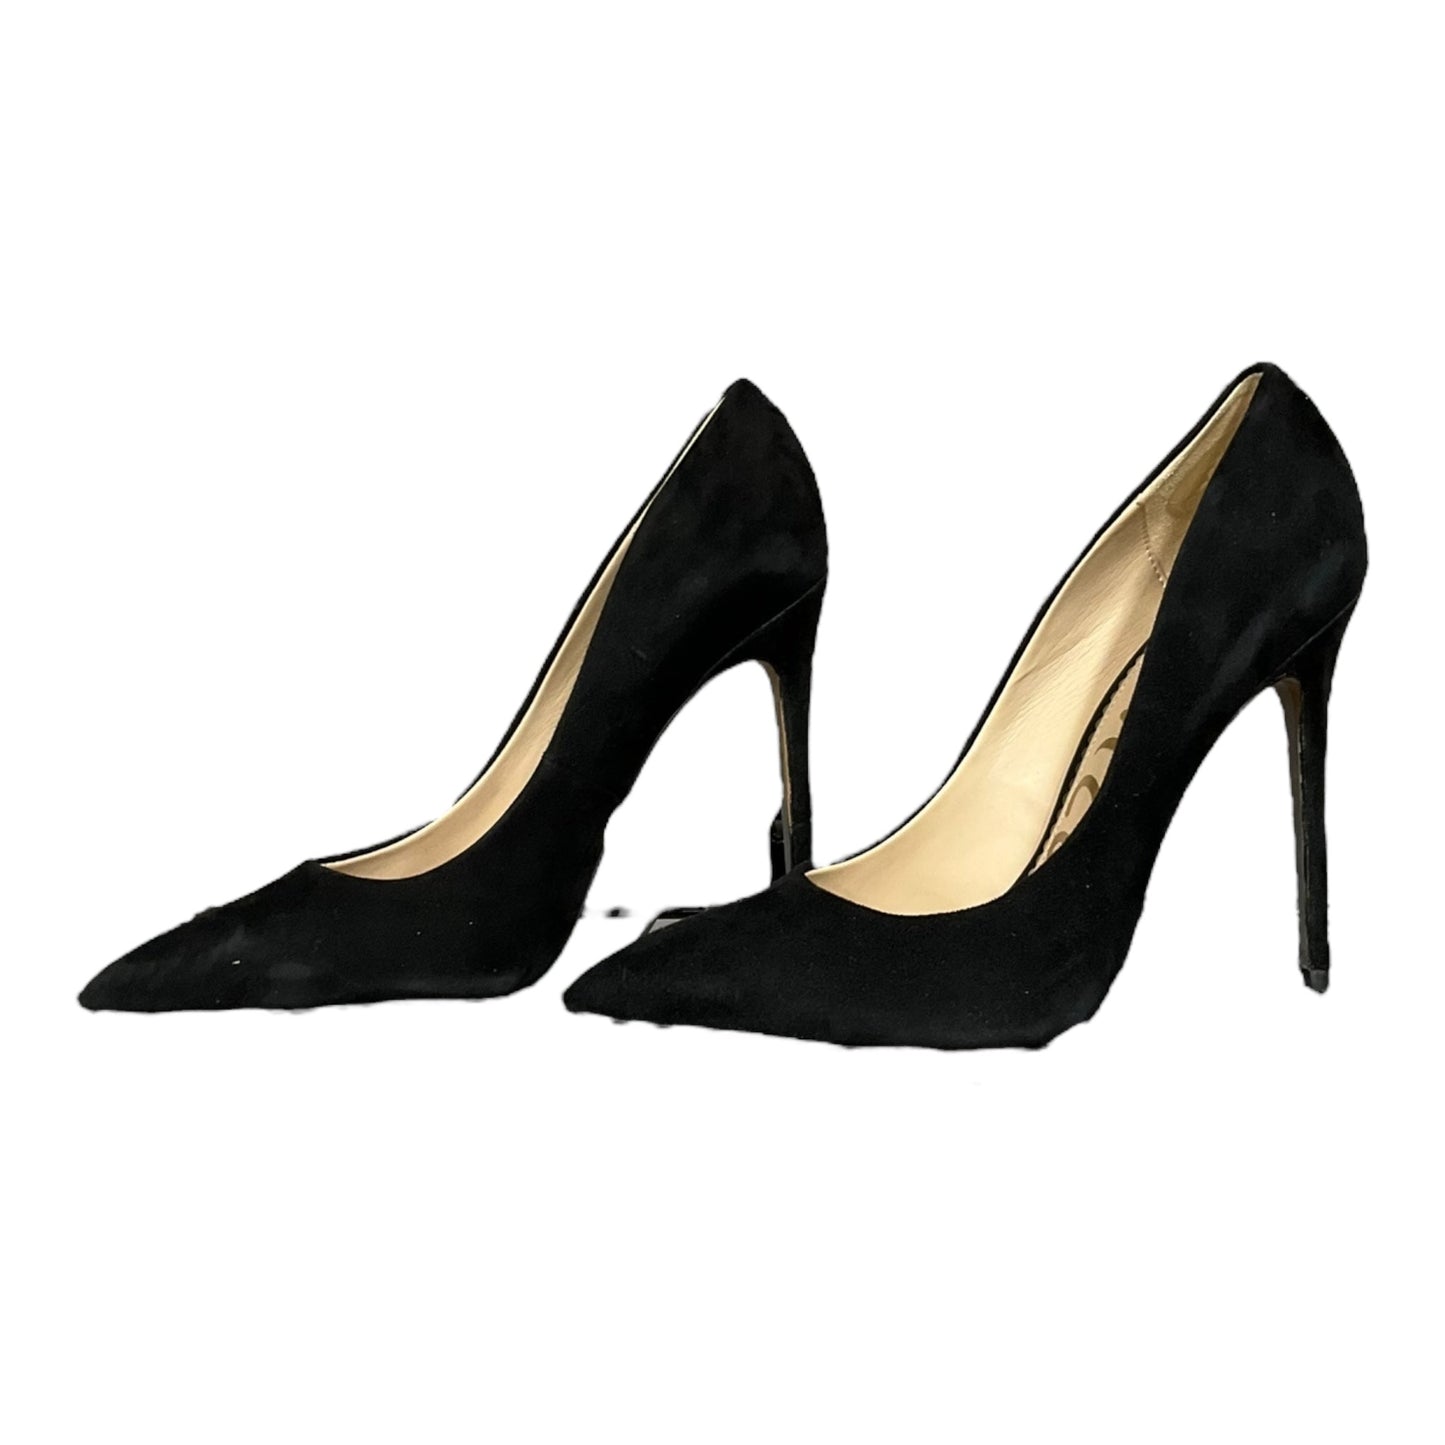 Black Shoes Heels Stiletto Sam Edelman, Size 10